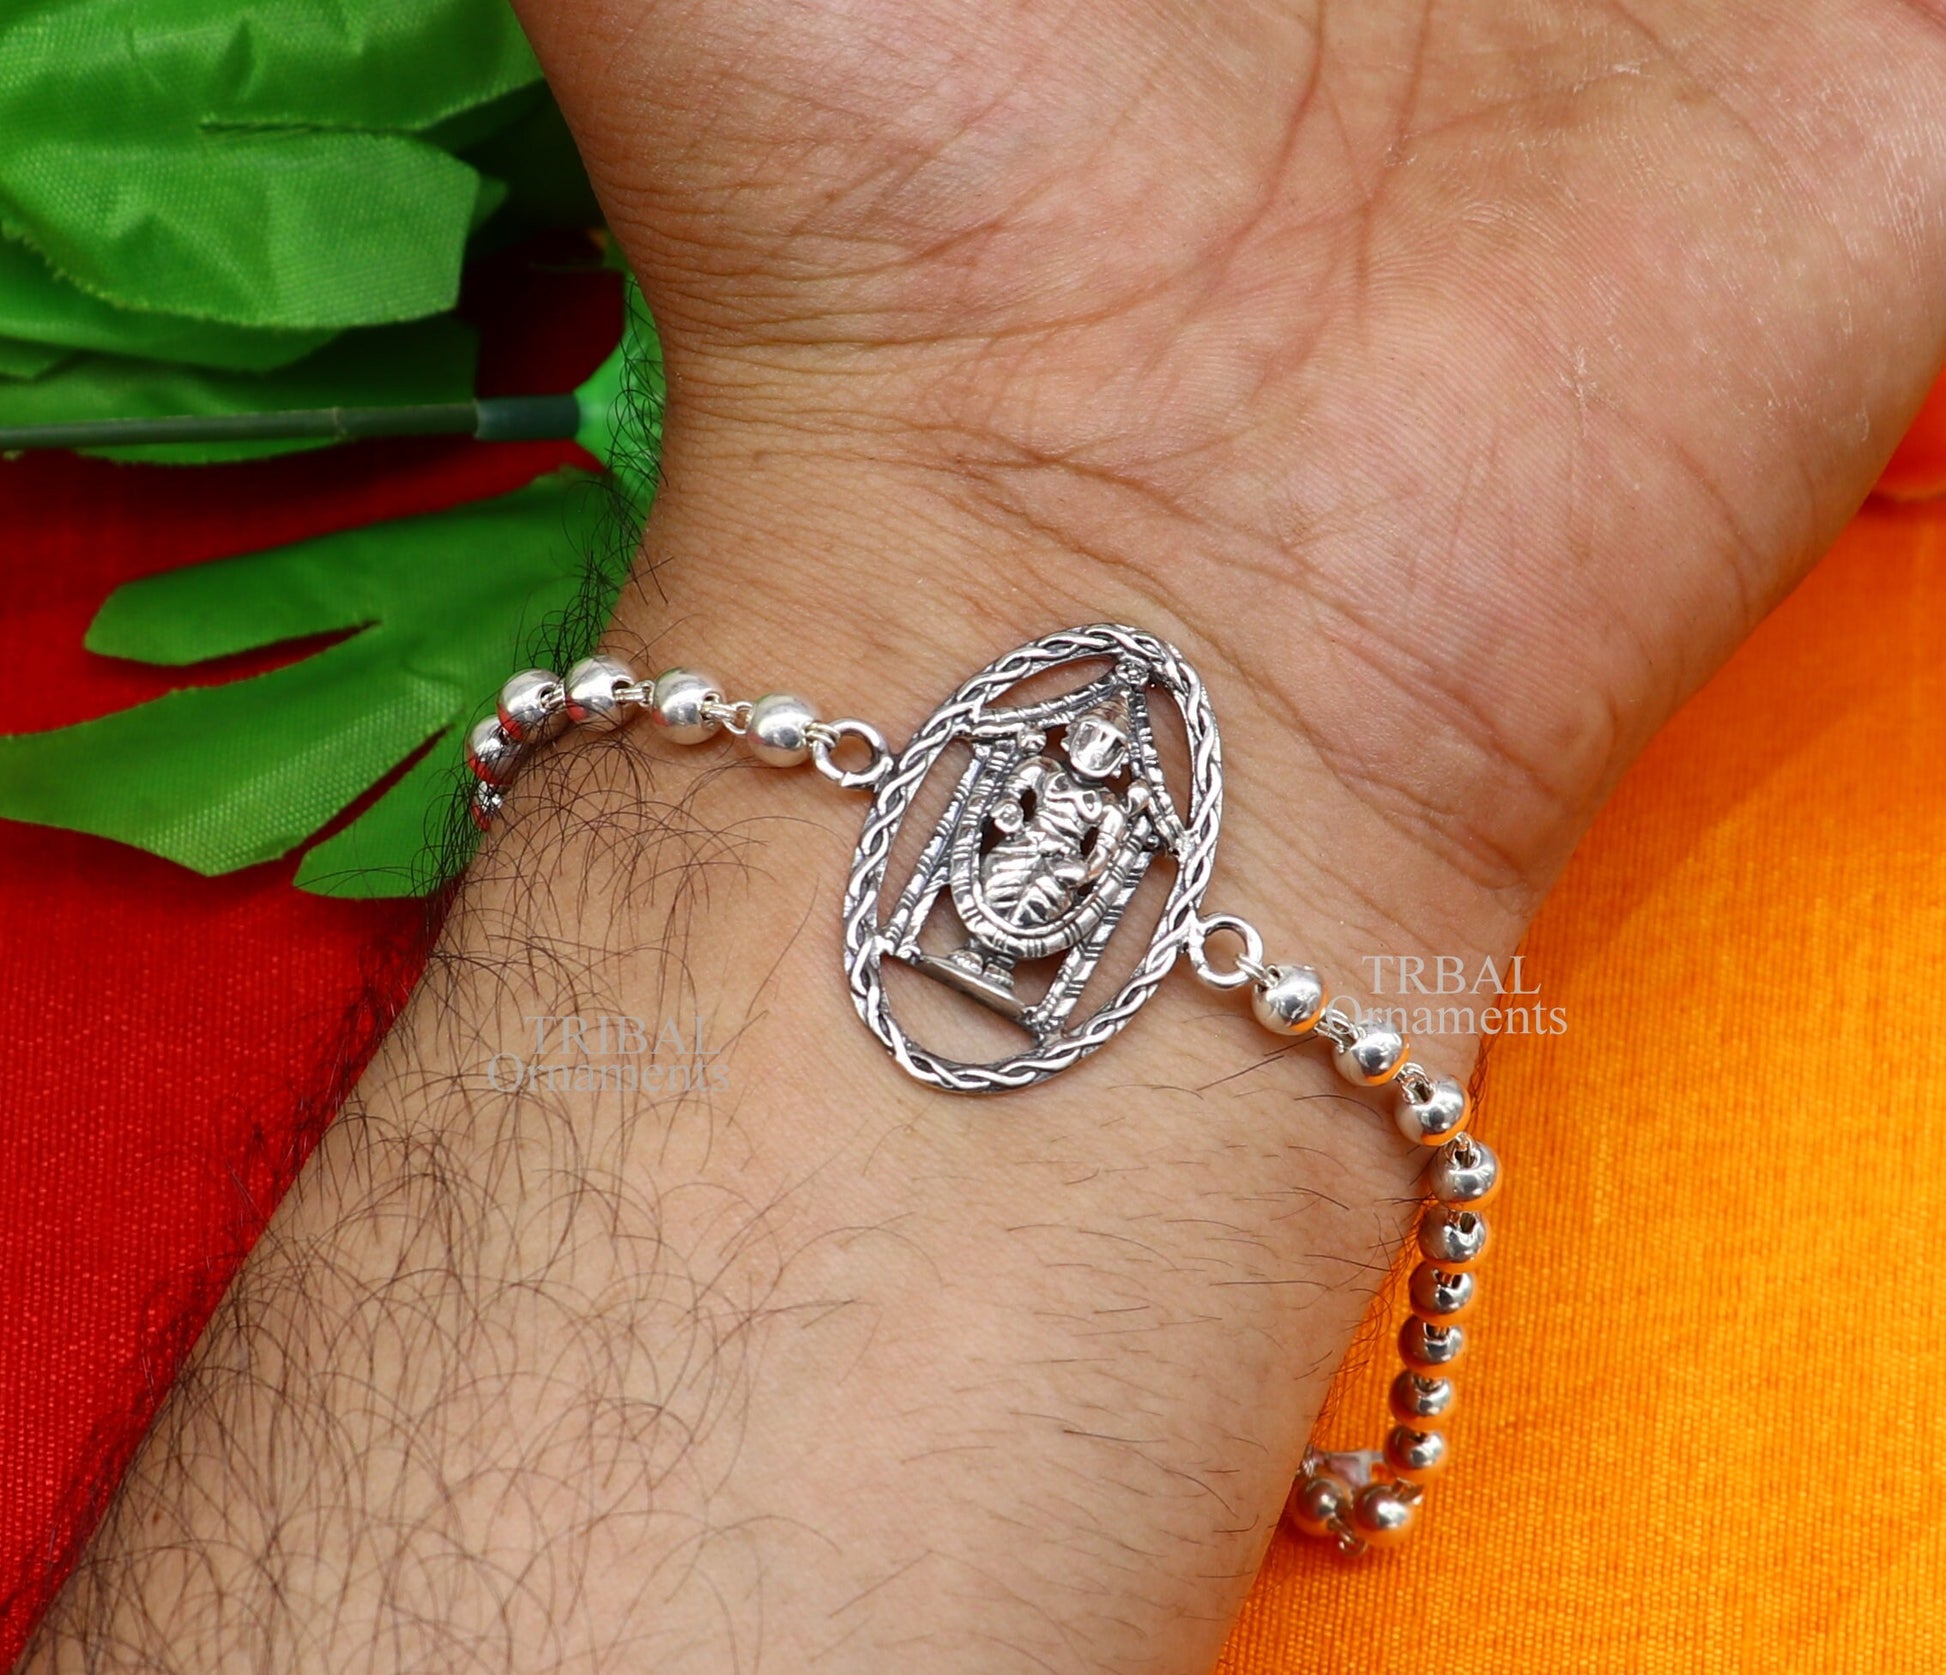 925 sterling silver handmade Lord Krishna on betel leaf Rakhi bracelet amazing Rudraksha or Tulsi beaded bracelet, daily use jewelry rk188 - TRIBAL ORNAMENTS